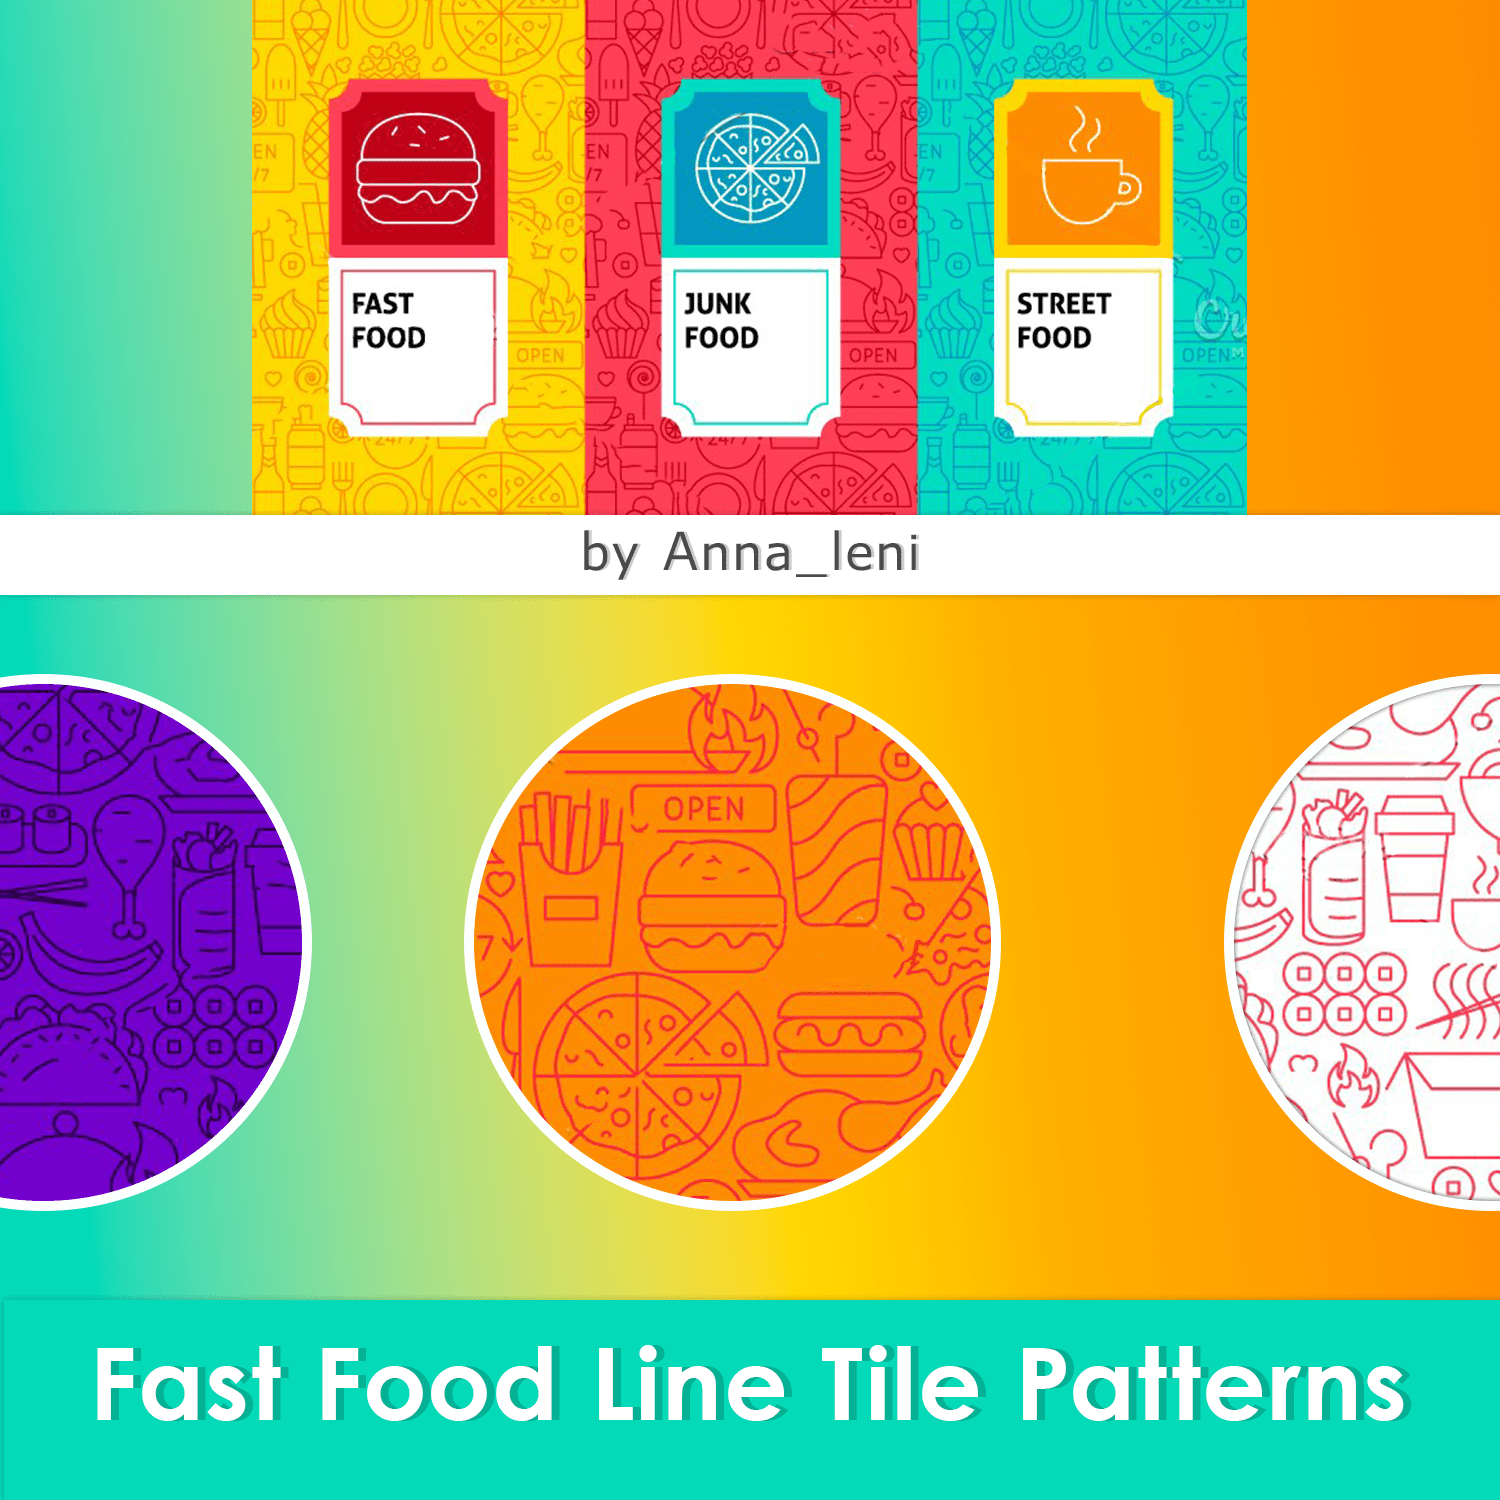 Fast Food Line Tile Patterns cover.